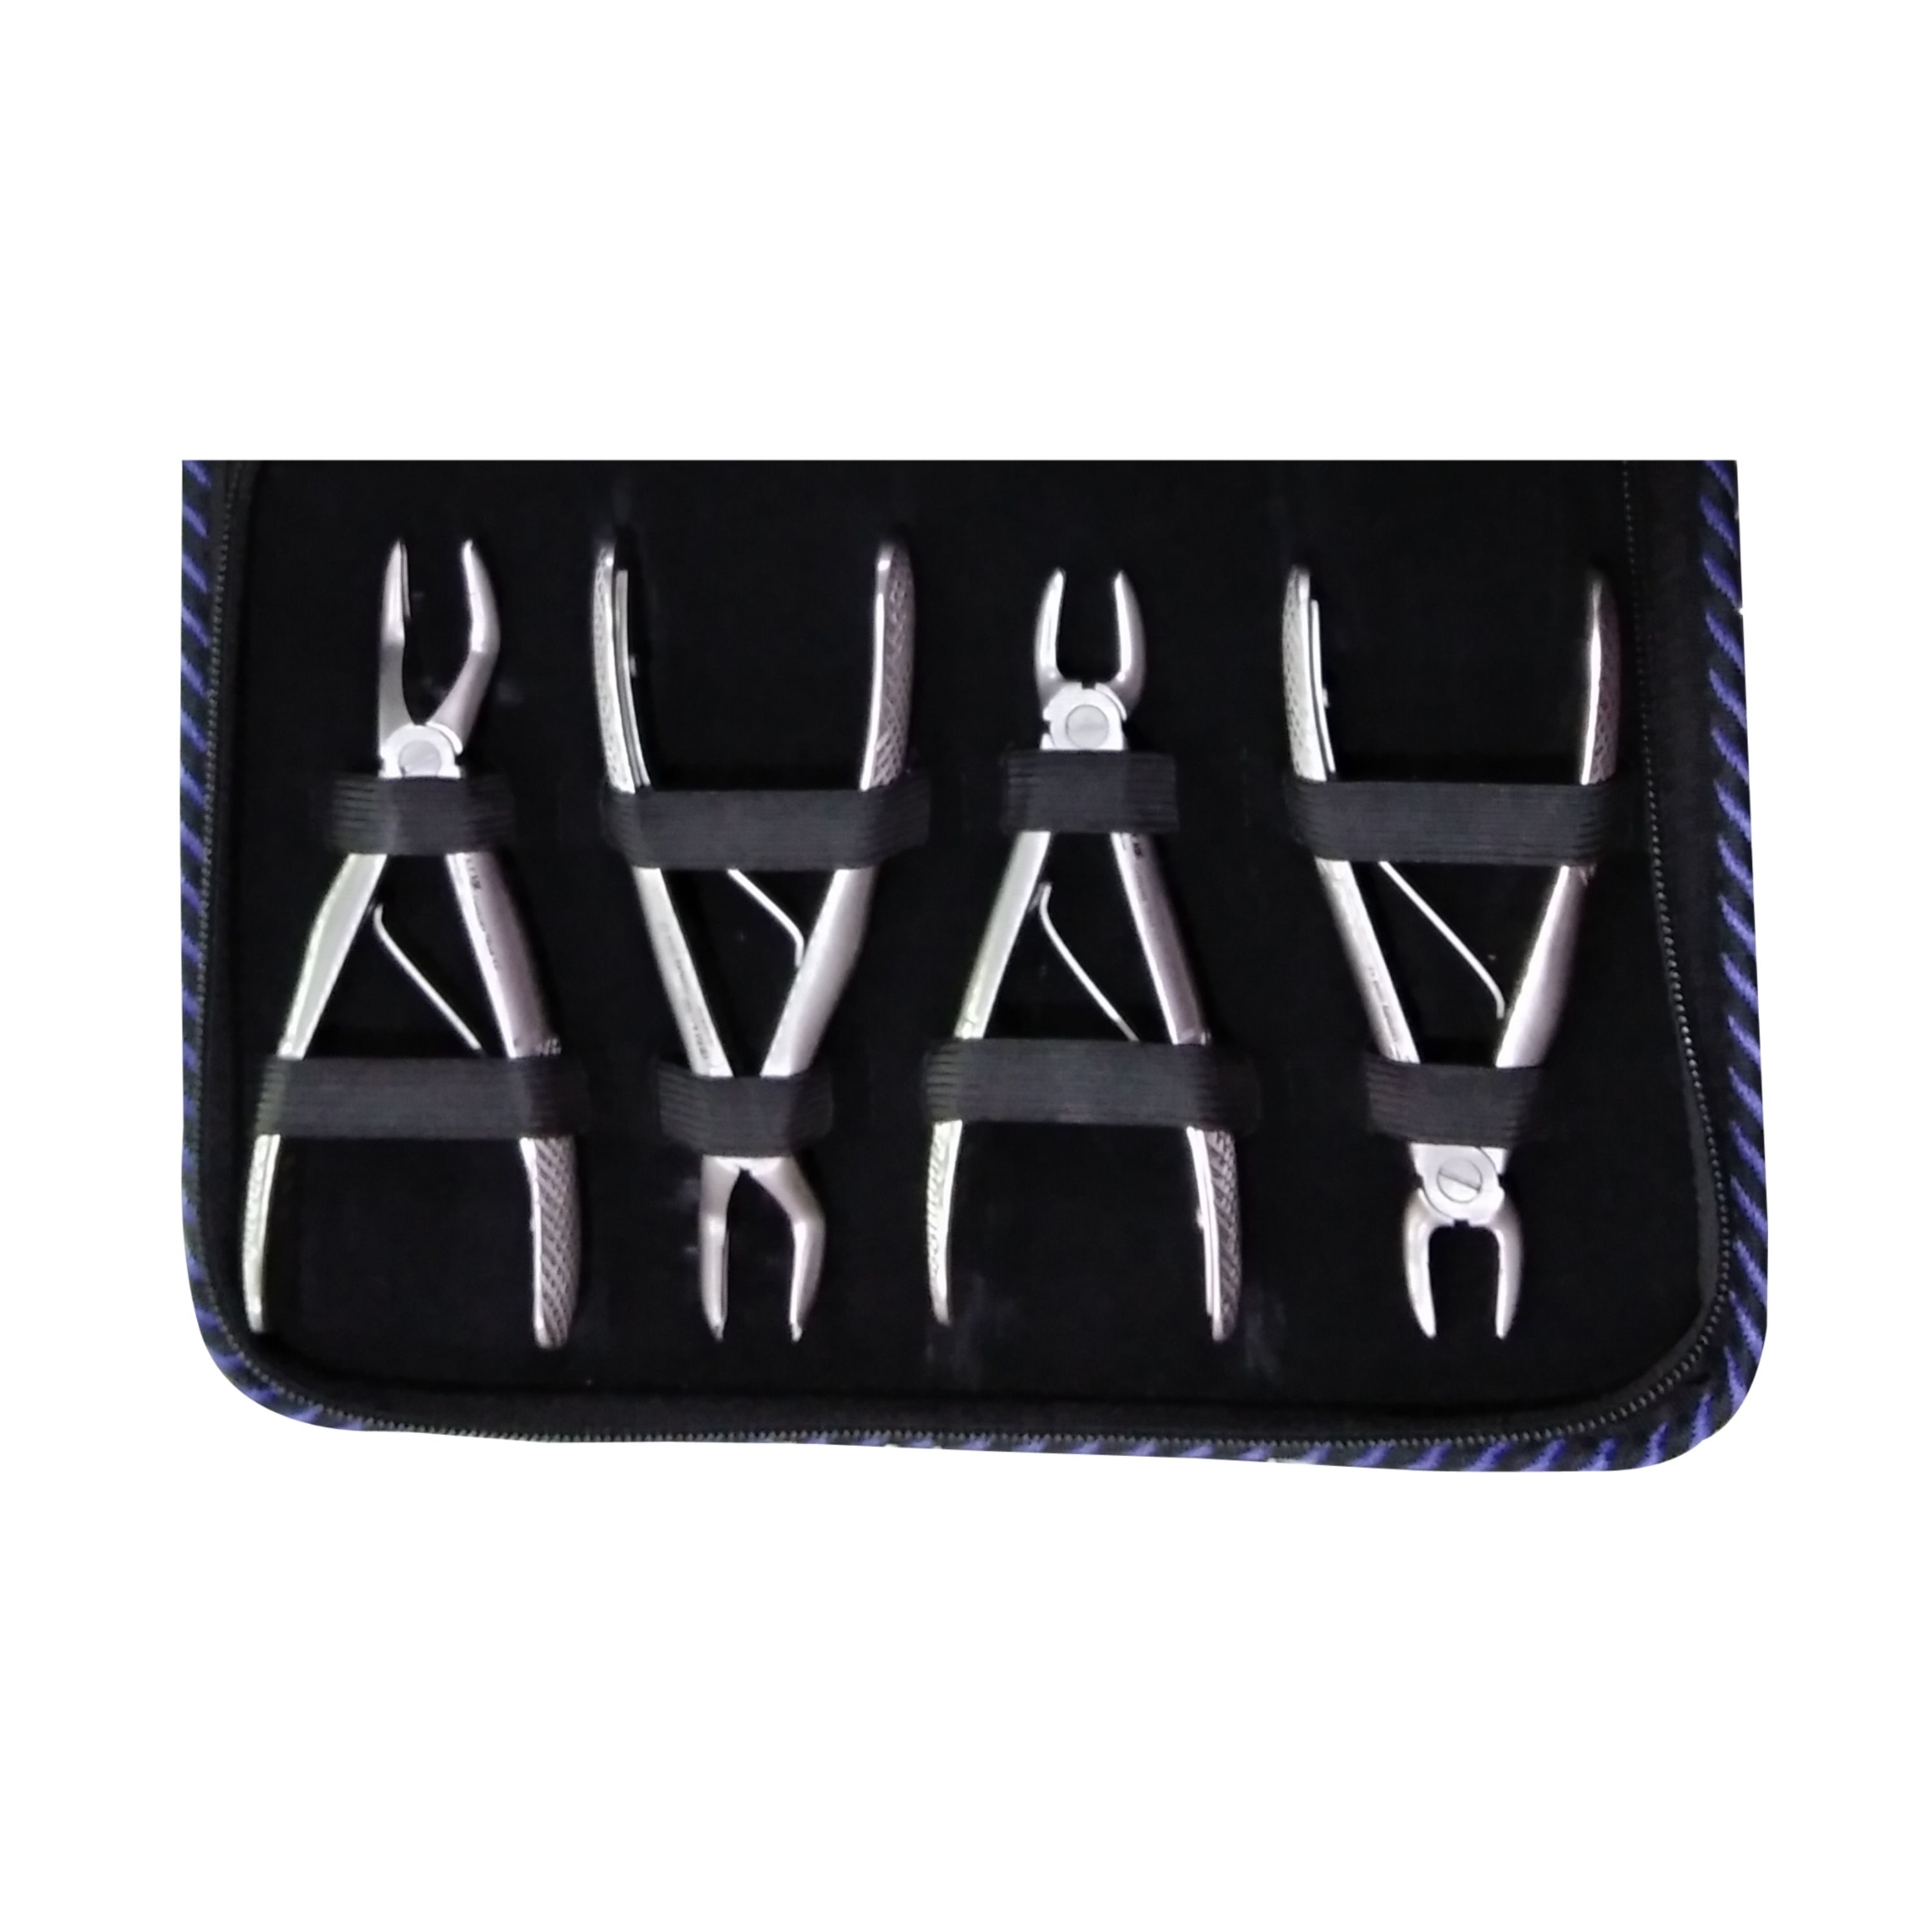 Trust & Care Standard Tooth Extraction Forceps Kit (Peedo) Set Of 7-Pcs